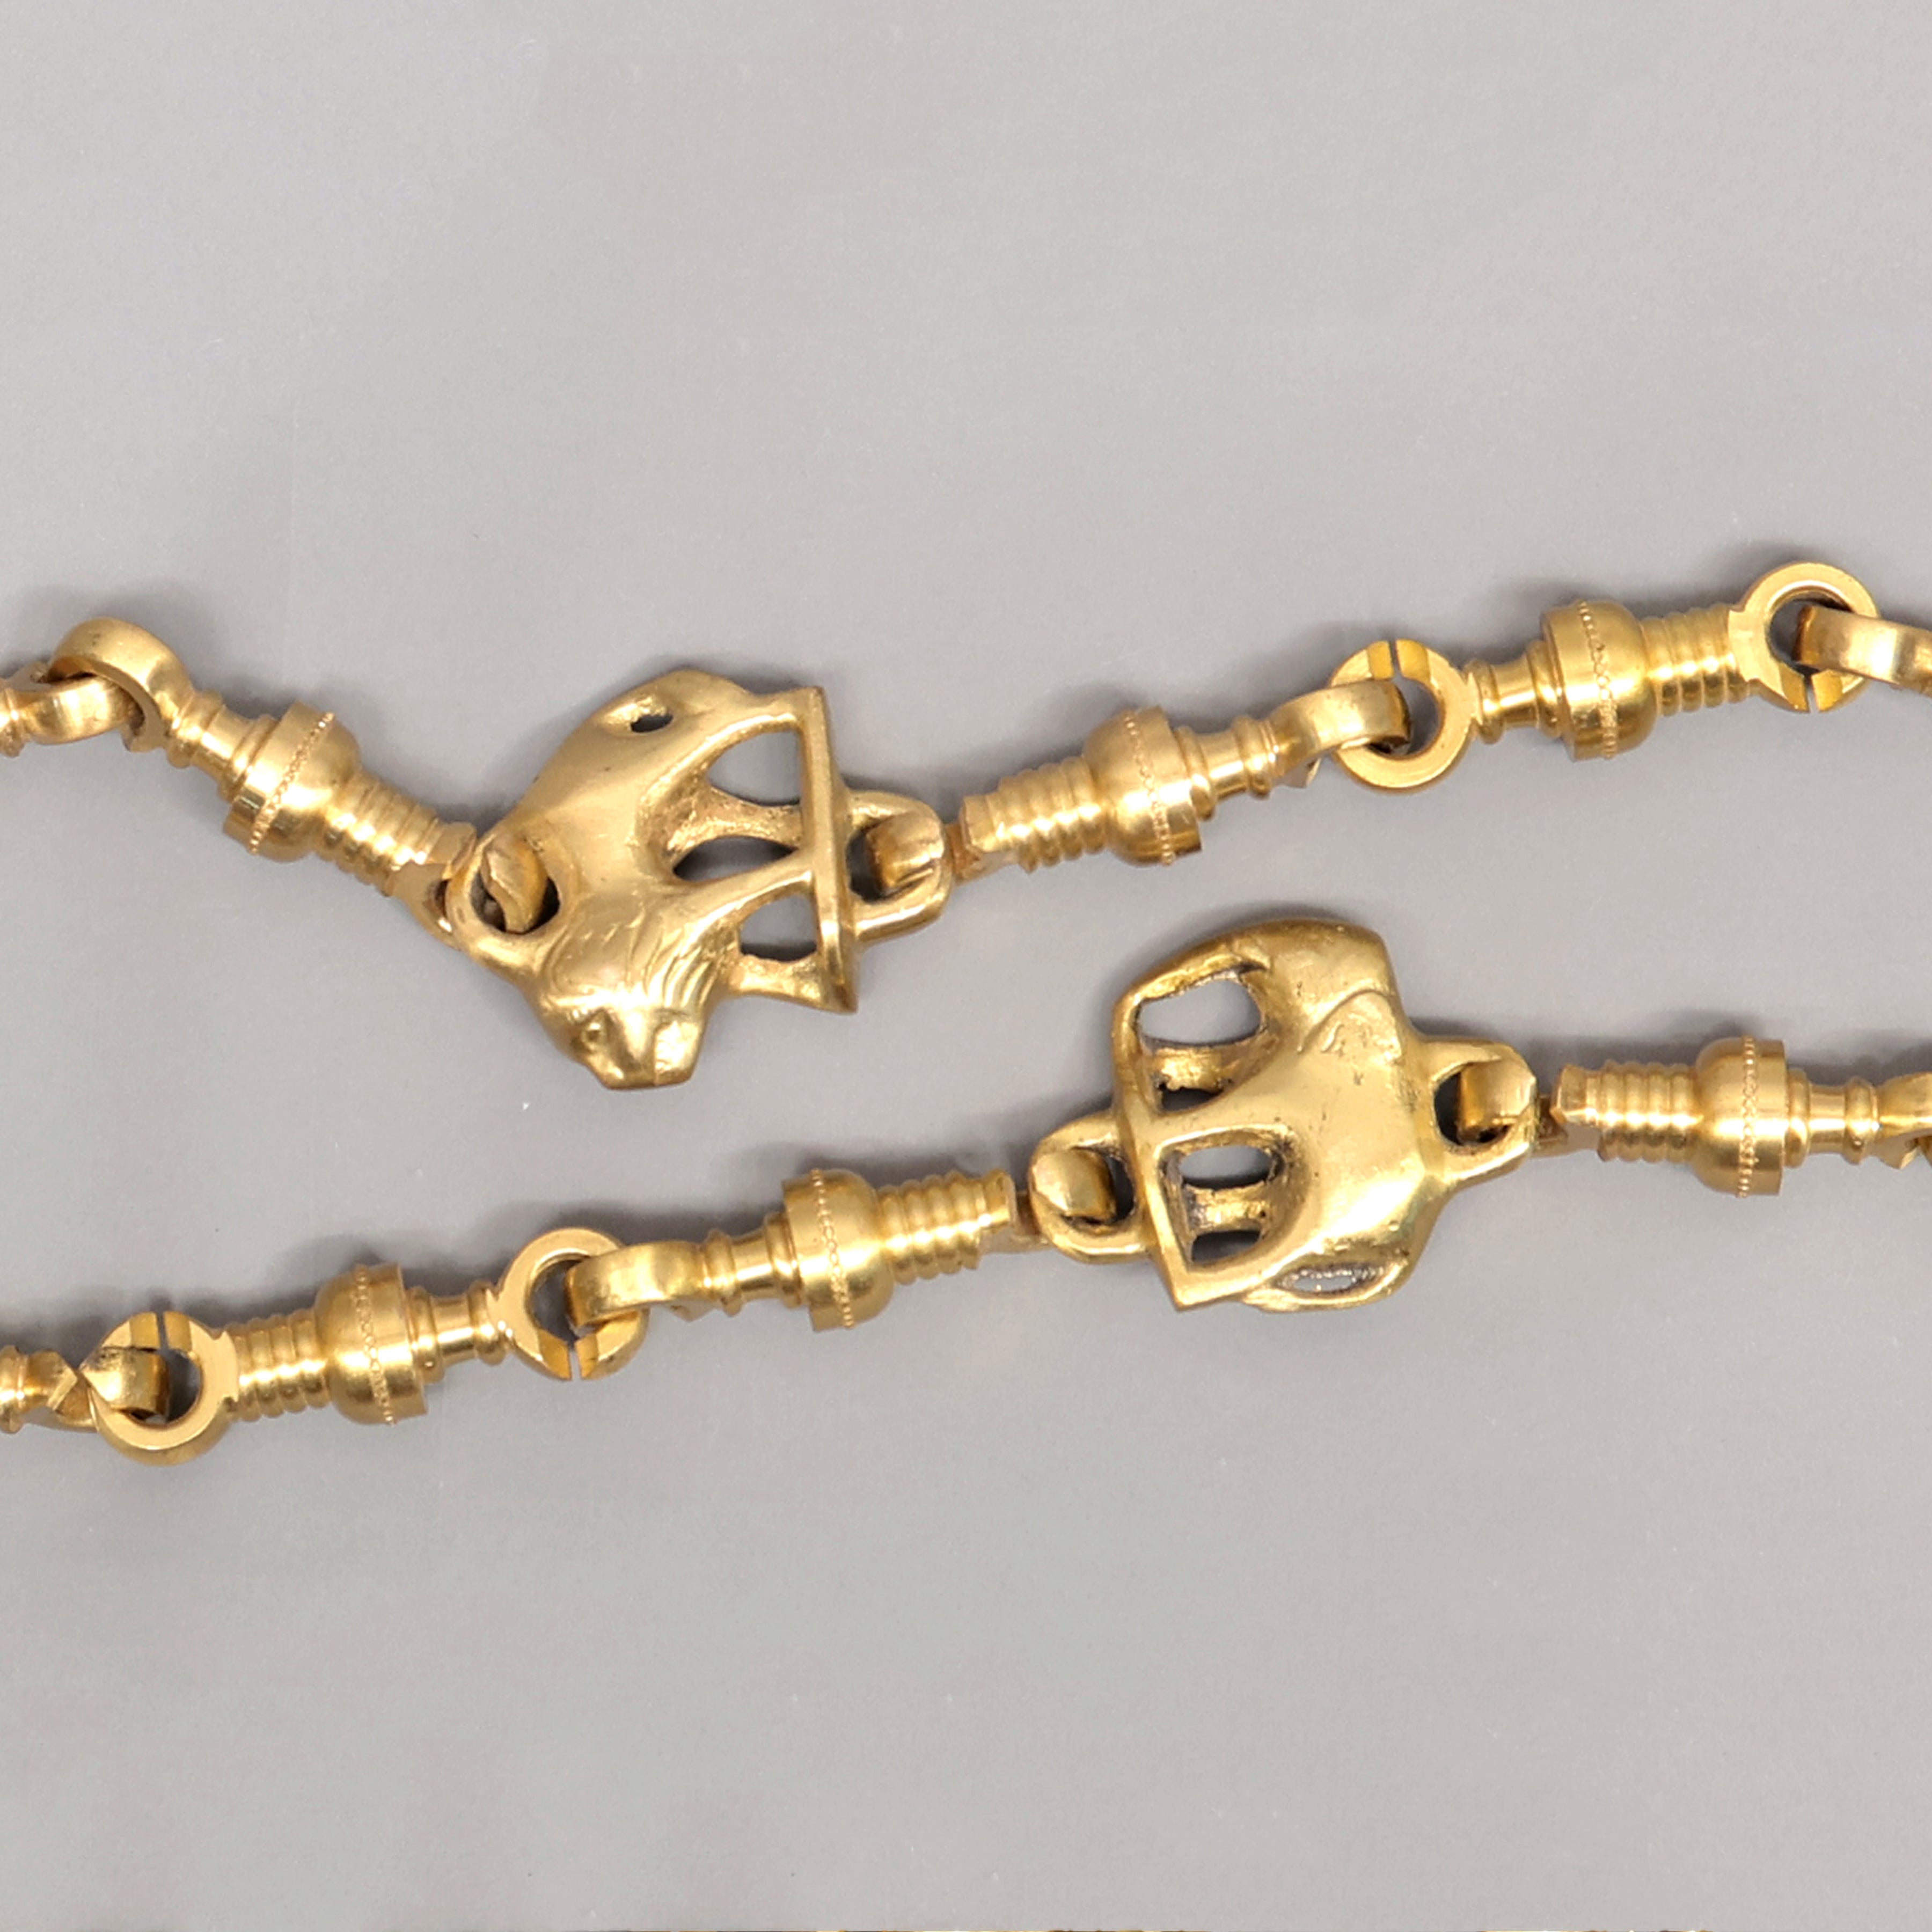 (6ft x 4 pc) Royal Brass Chain Chain